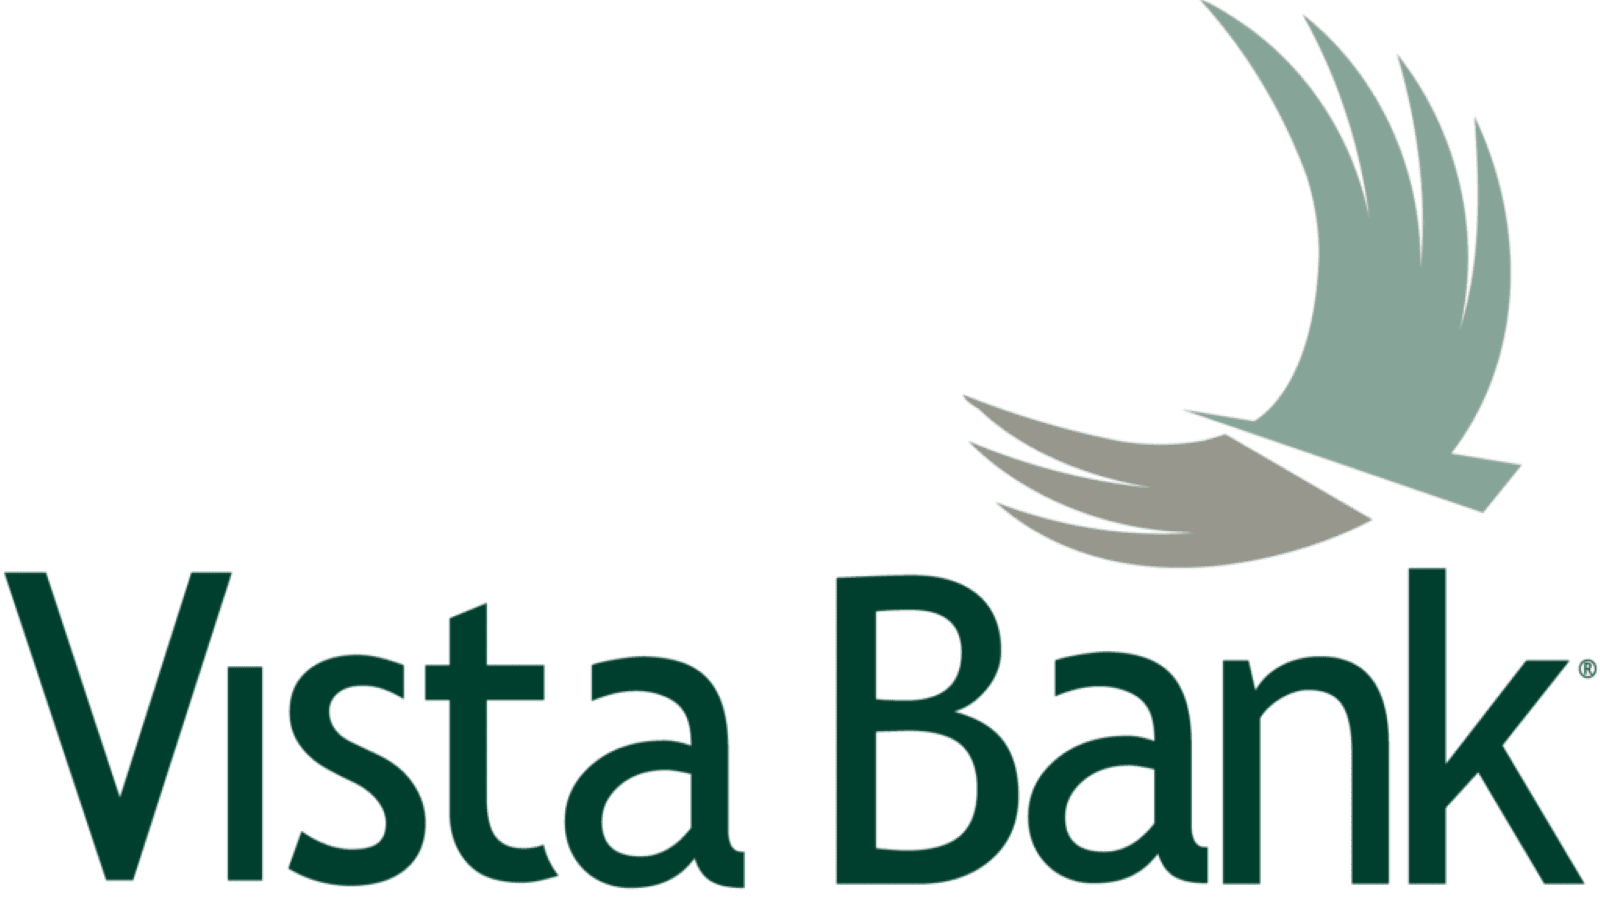 Vista Bank